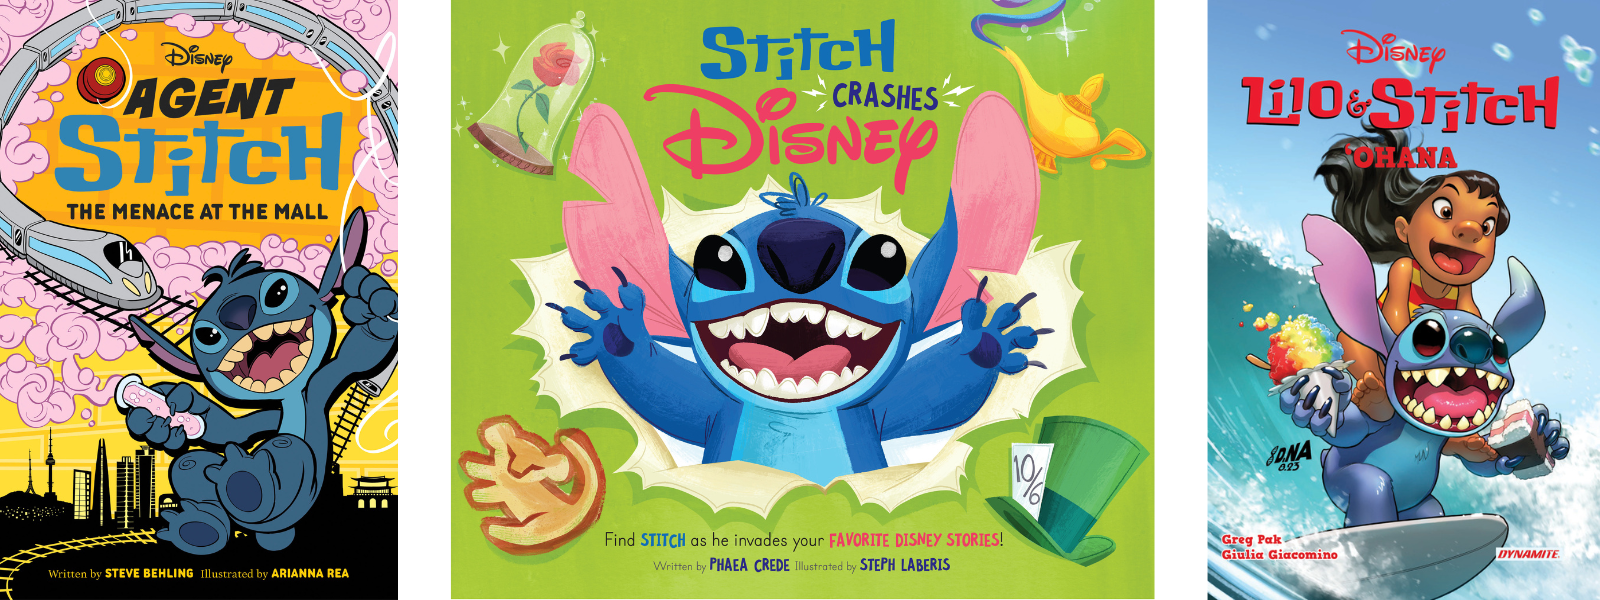  A triptych image of several Lilo & Stitch-themed books, including Agent Stitch, Stitch Crashes Disney, and Lil & Stitch Vol. 1: ‘OHANA.